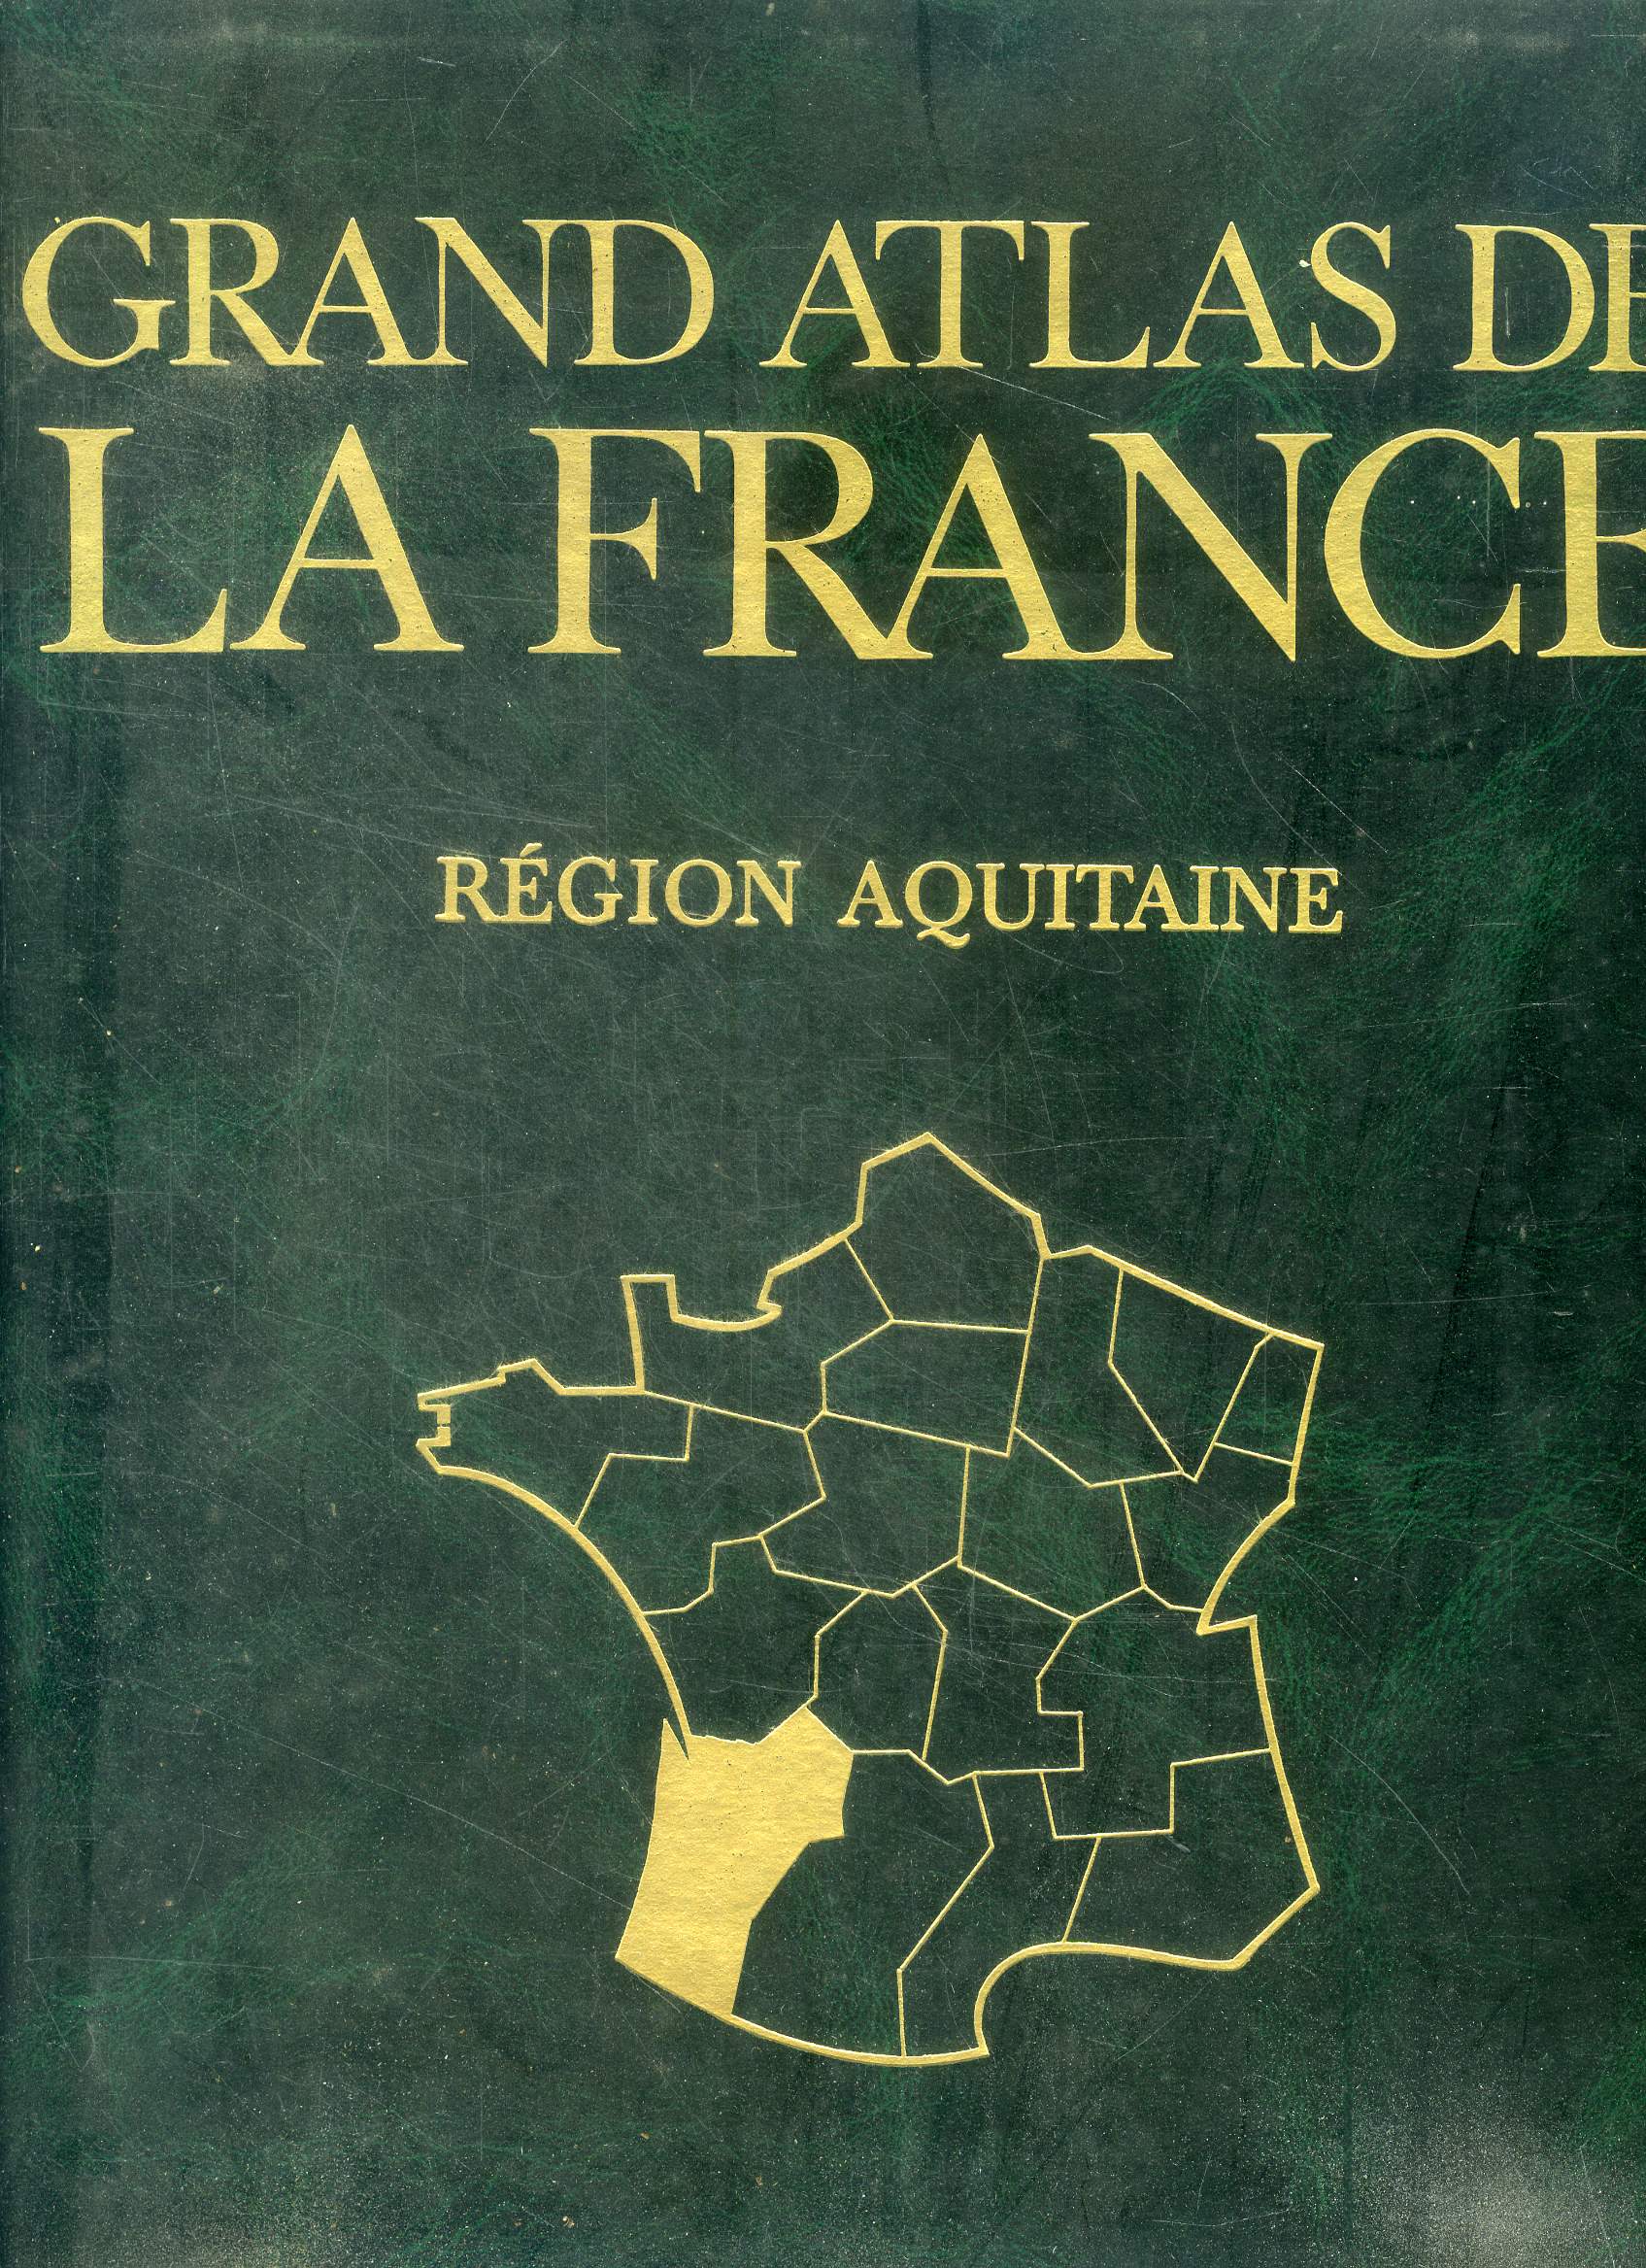 Grand atlas de la france - region aquitaine - volume 5